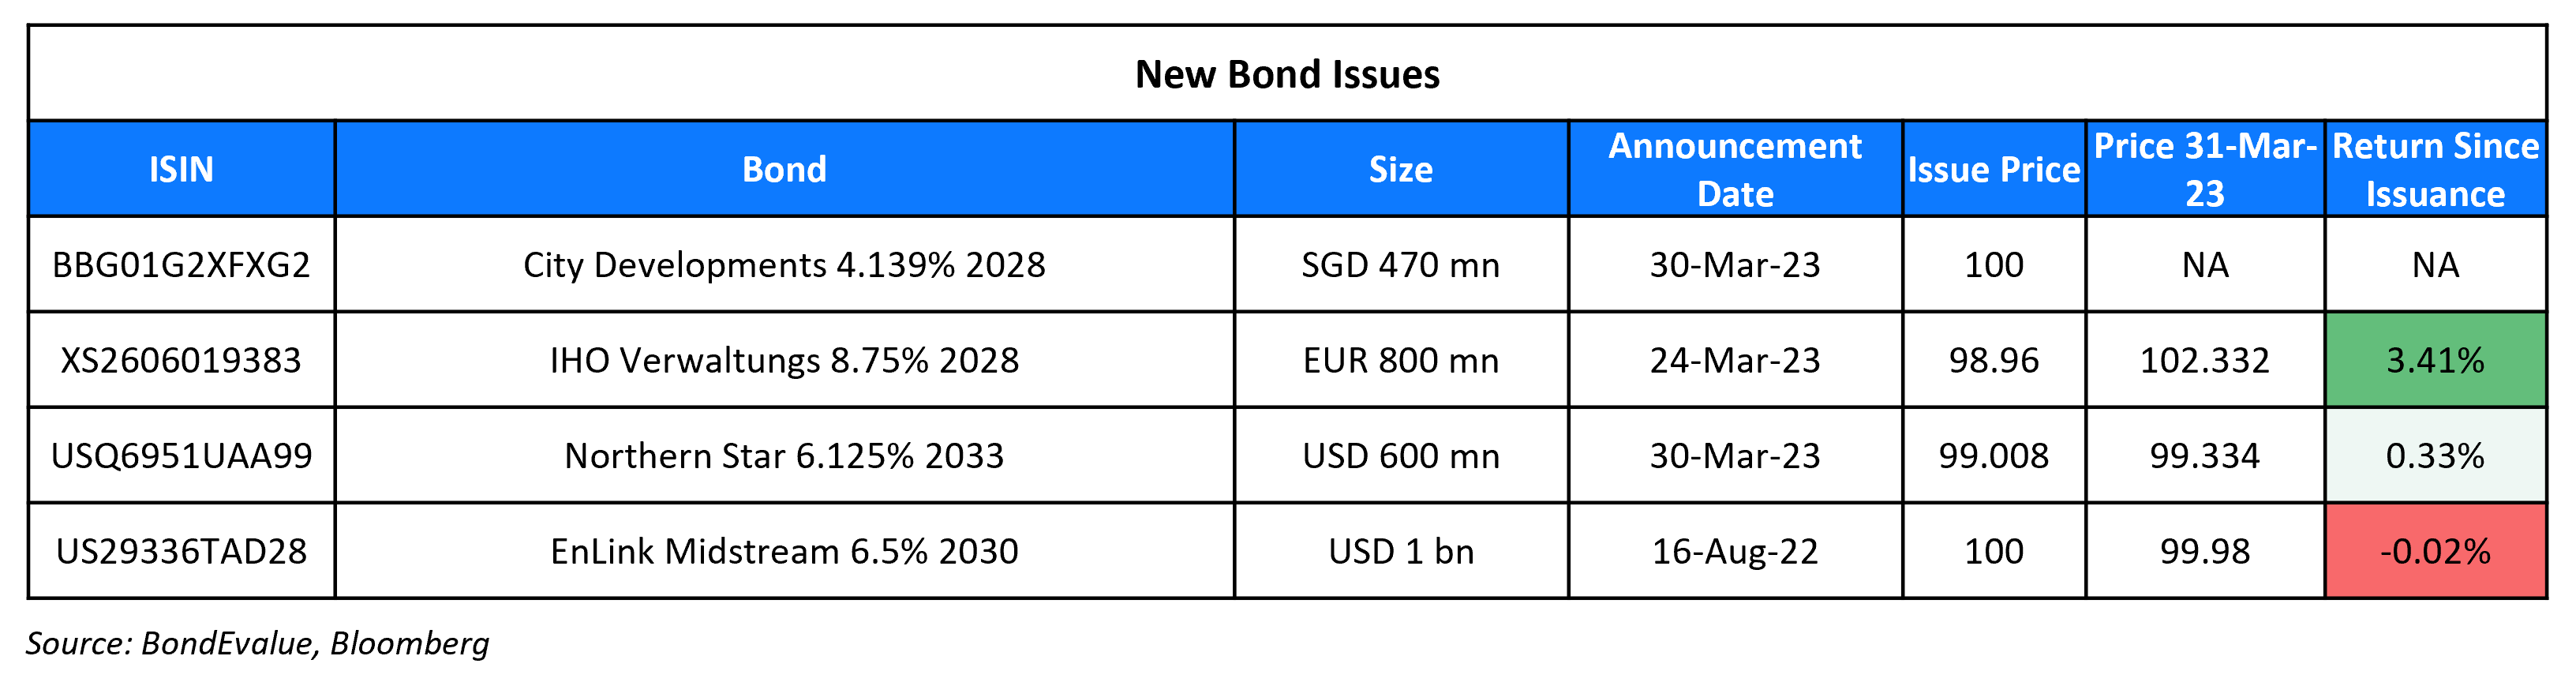 New Bond Issues 31 Mar 23